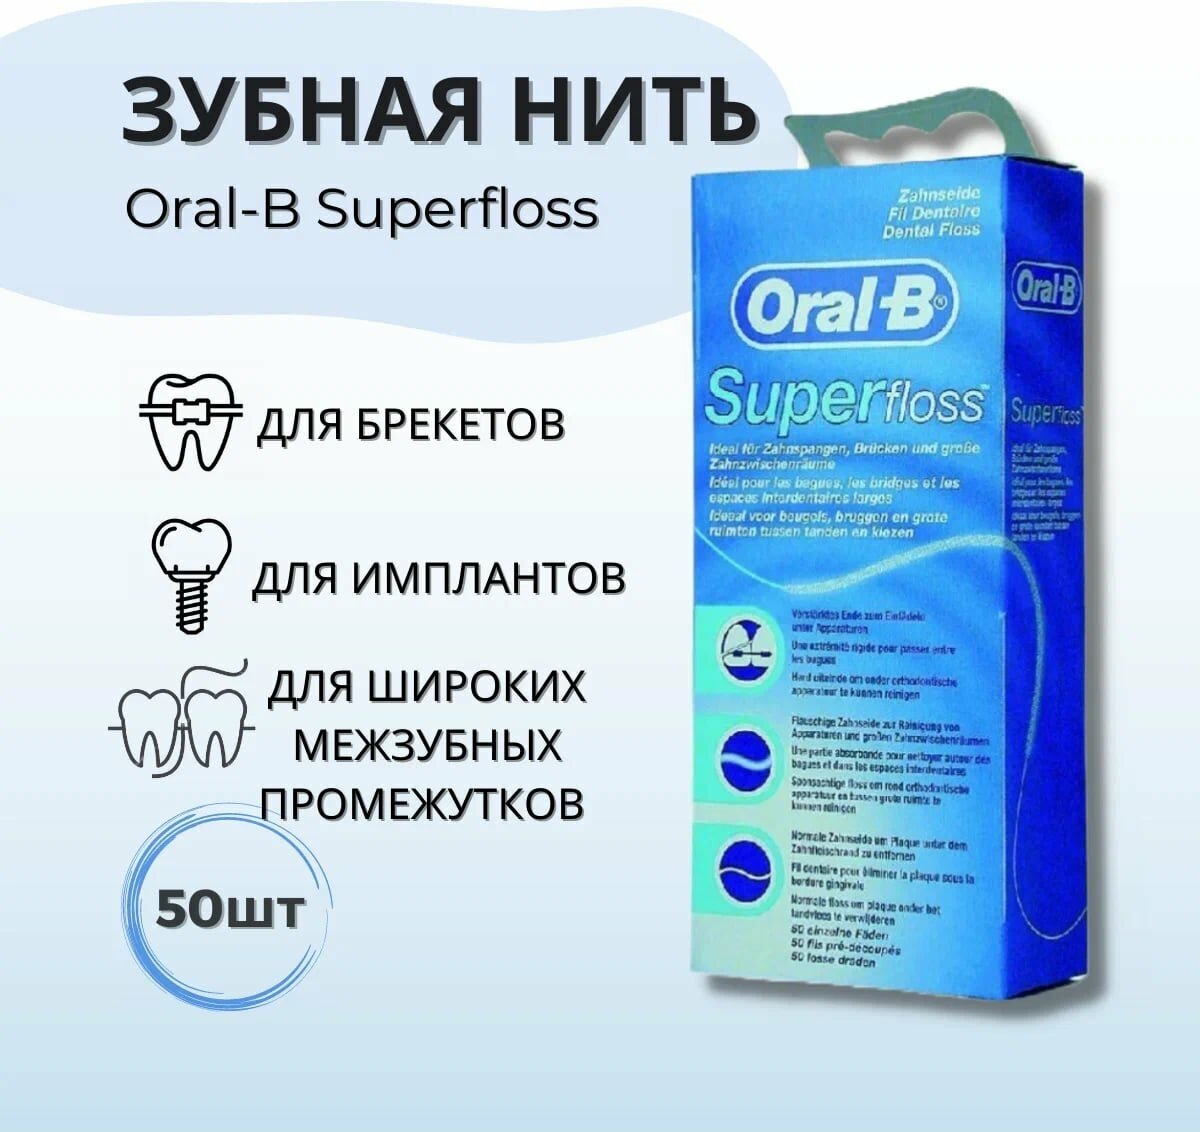 Зубная нить Oral-B - фото №14